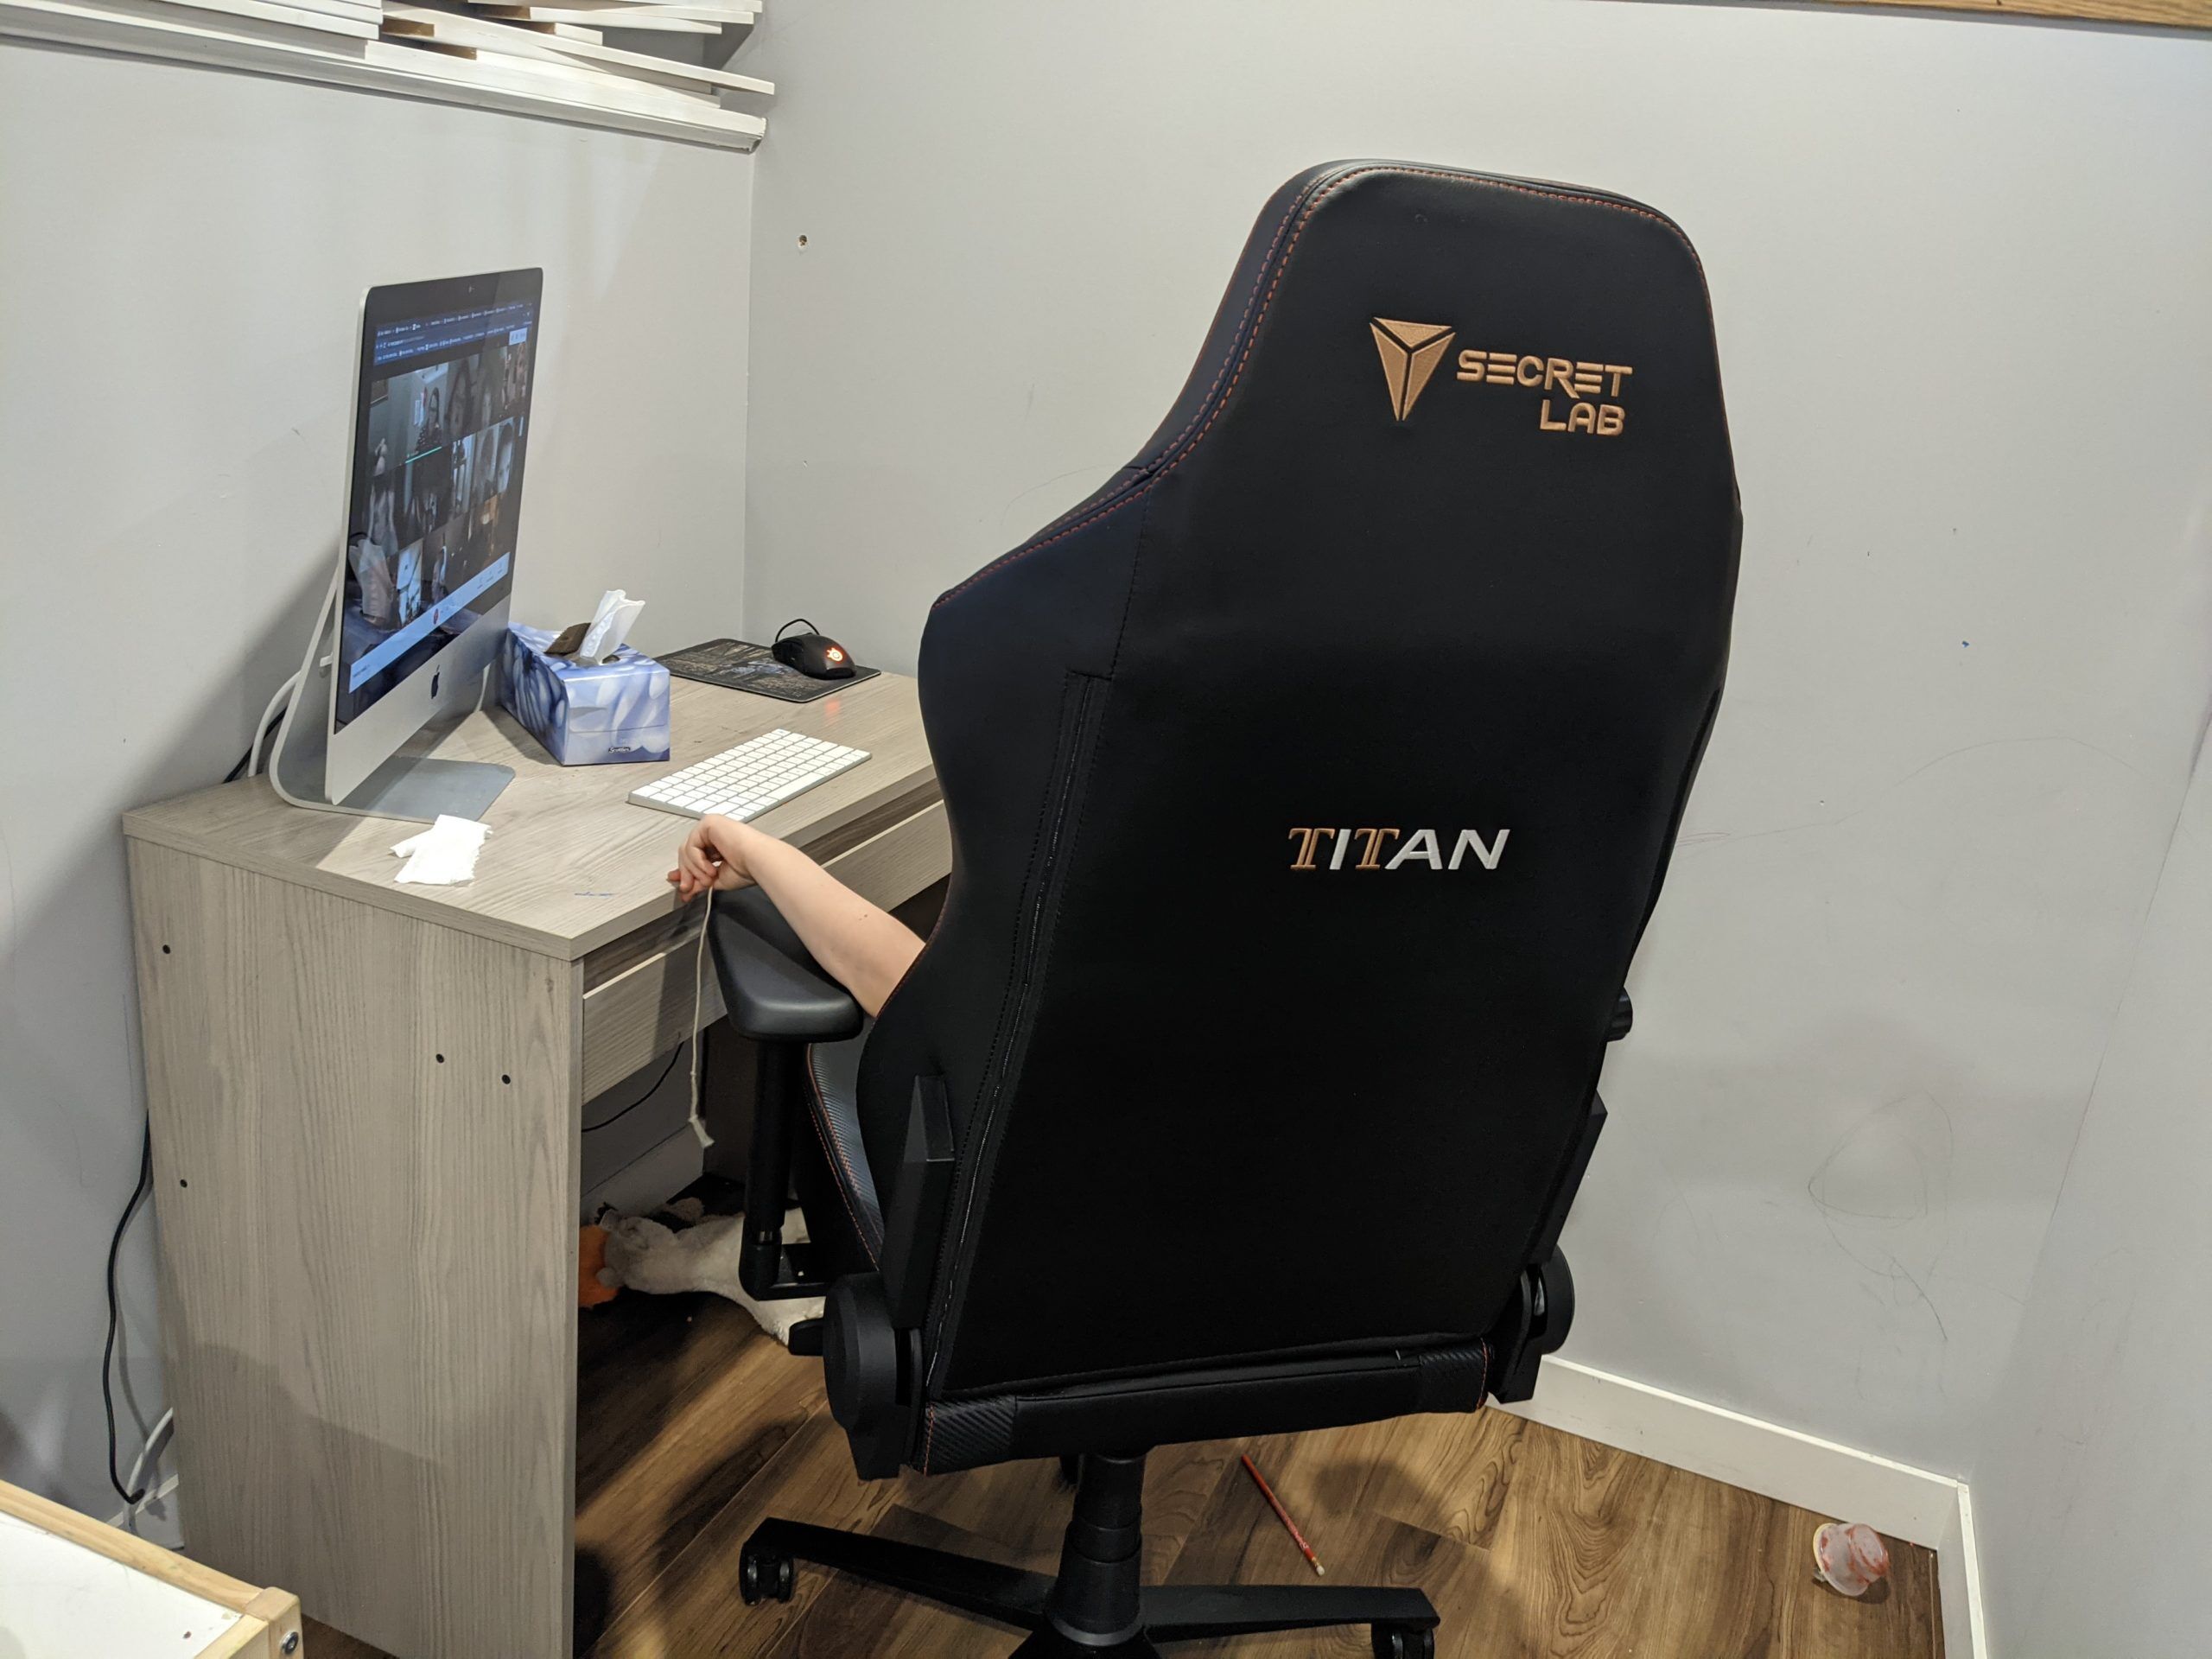 Secret Lab Titan Stealth Gaming Chair Review